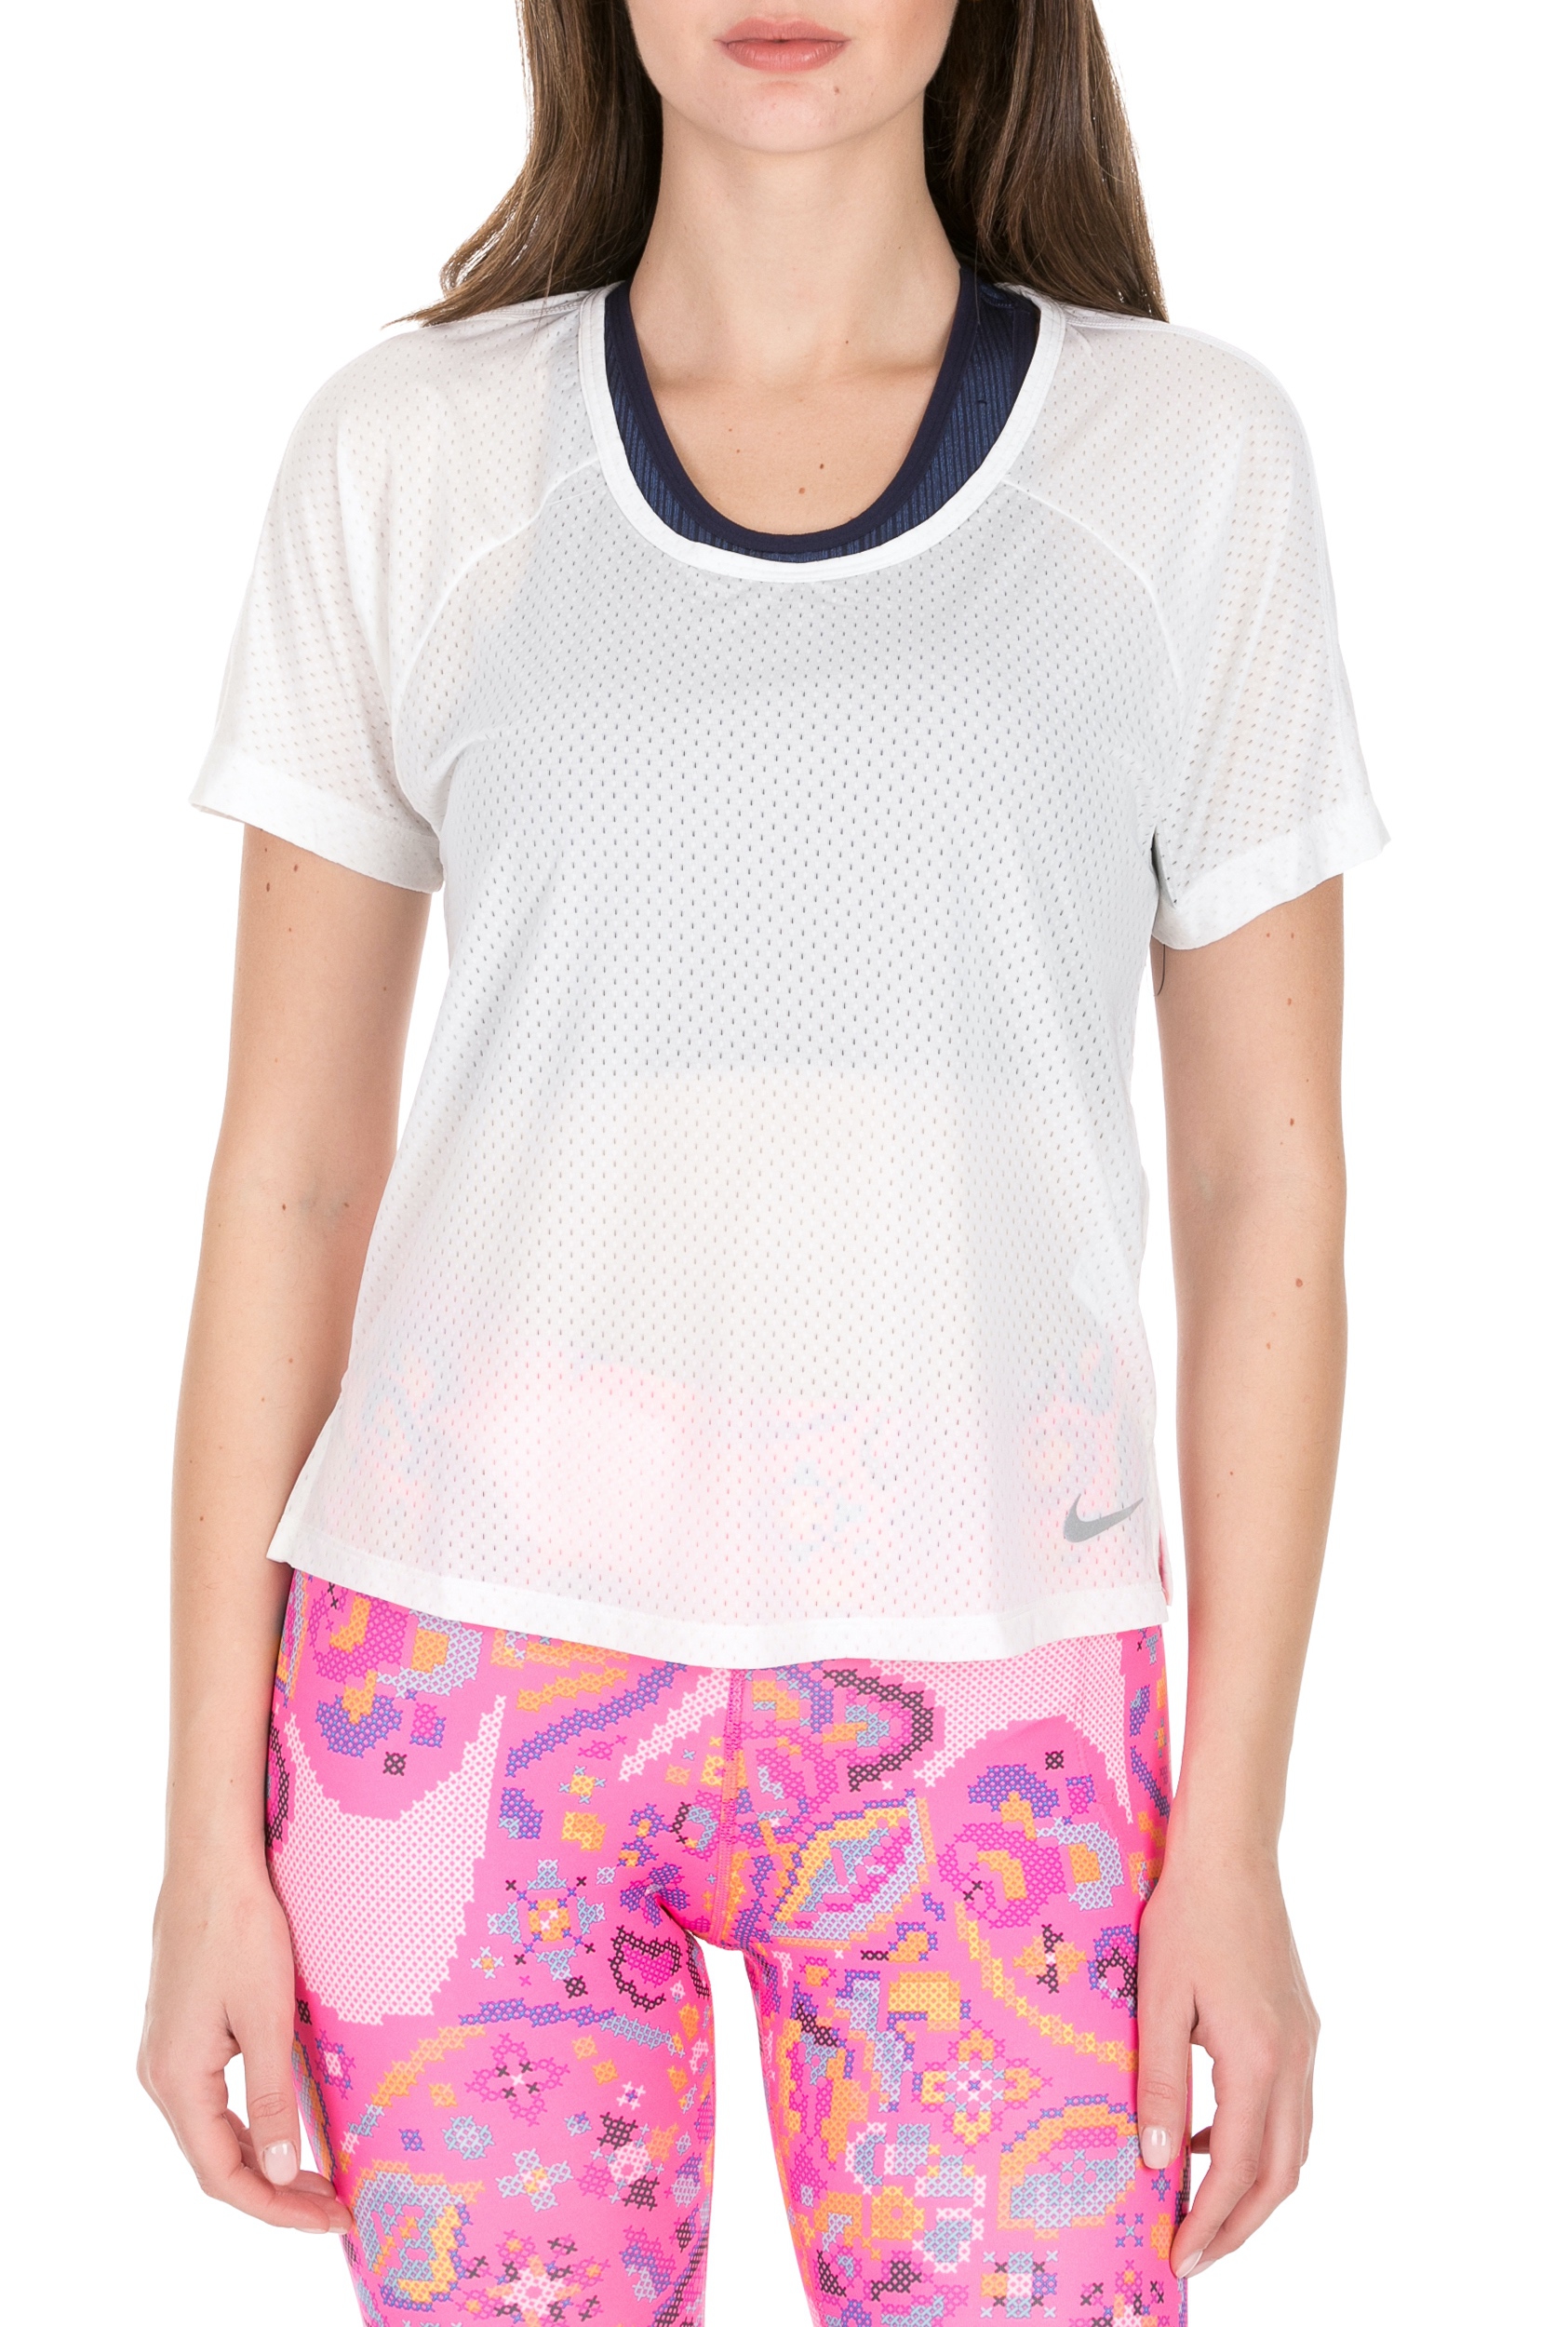 NIKE - Γυναικεία μπλούζα NIKE MILER TOP λευκή Γυναικεία/Ρούχα/Αθλητικά/T-shirt-Τοπ